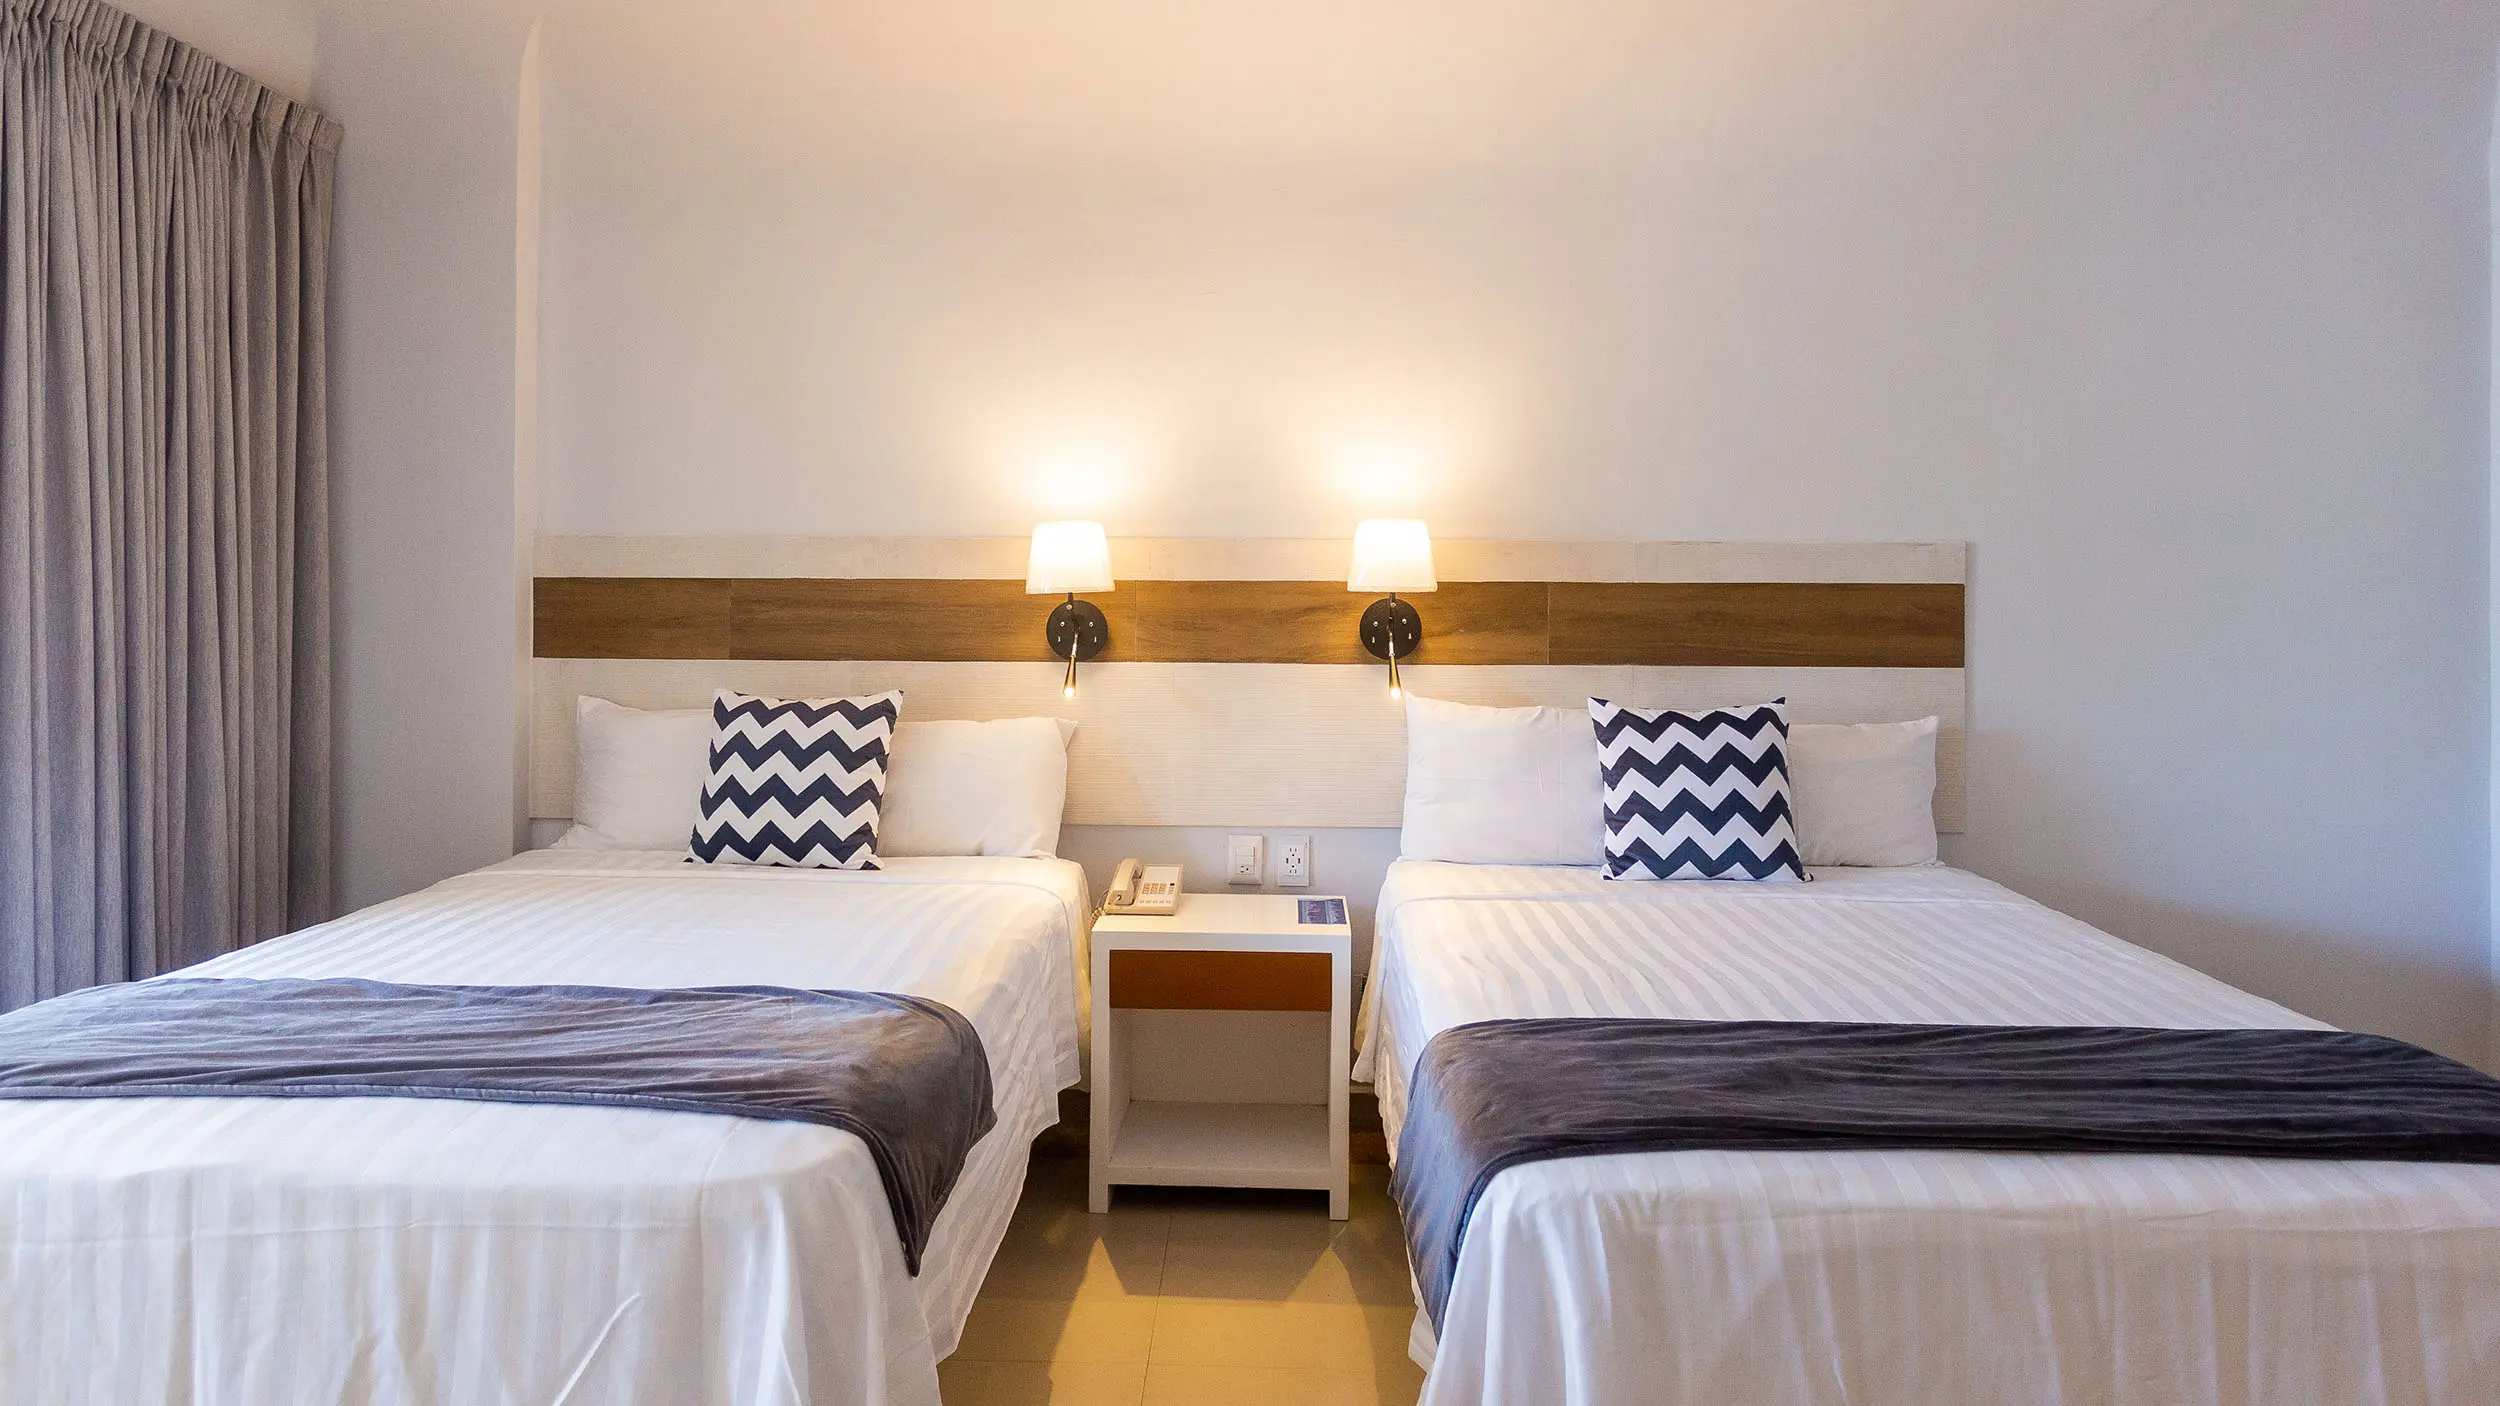 Dos camas matrimoniales en Jr Suite hotel Luna Palace Mazatlan